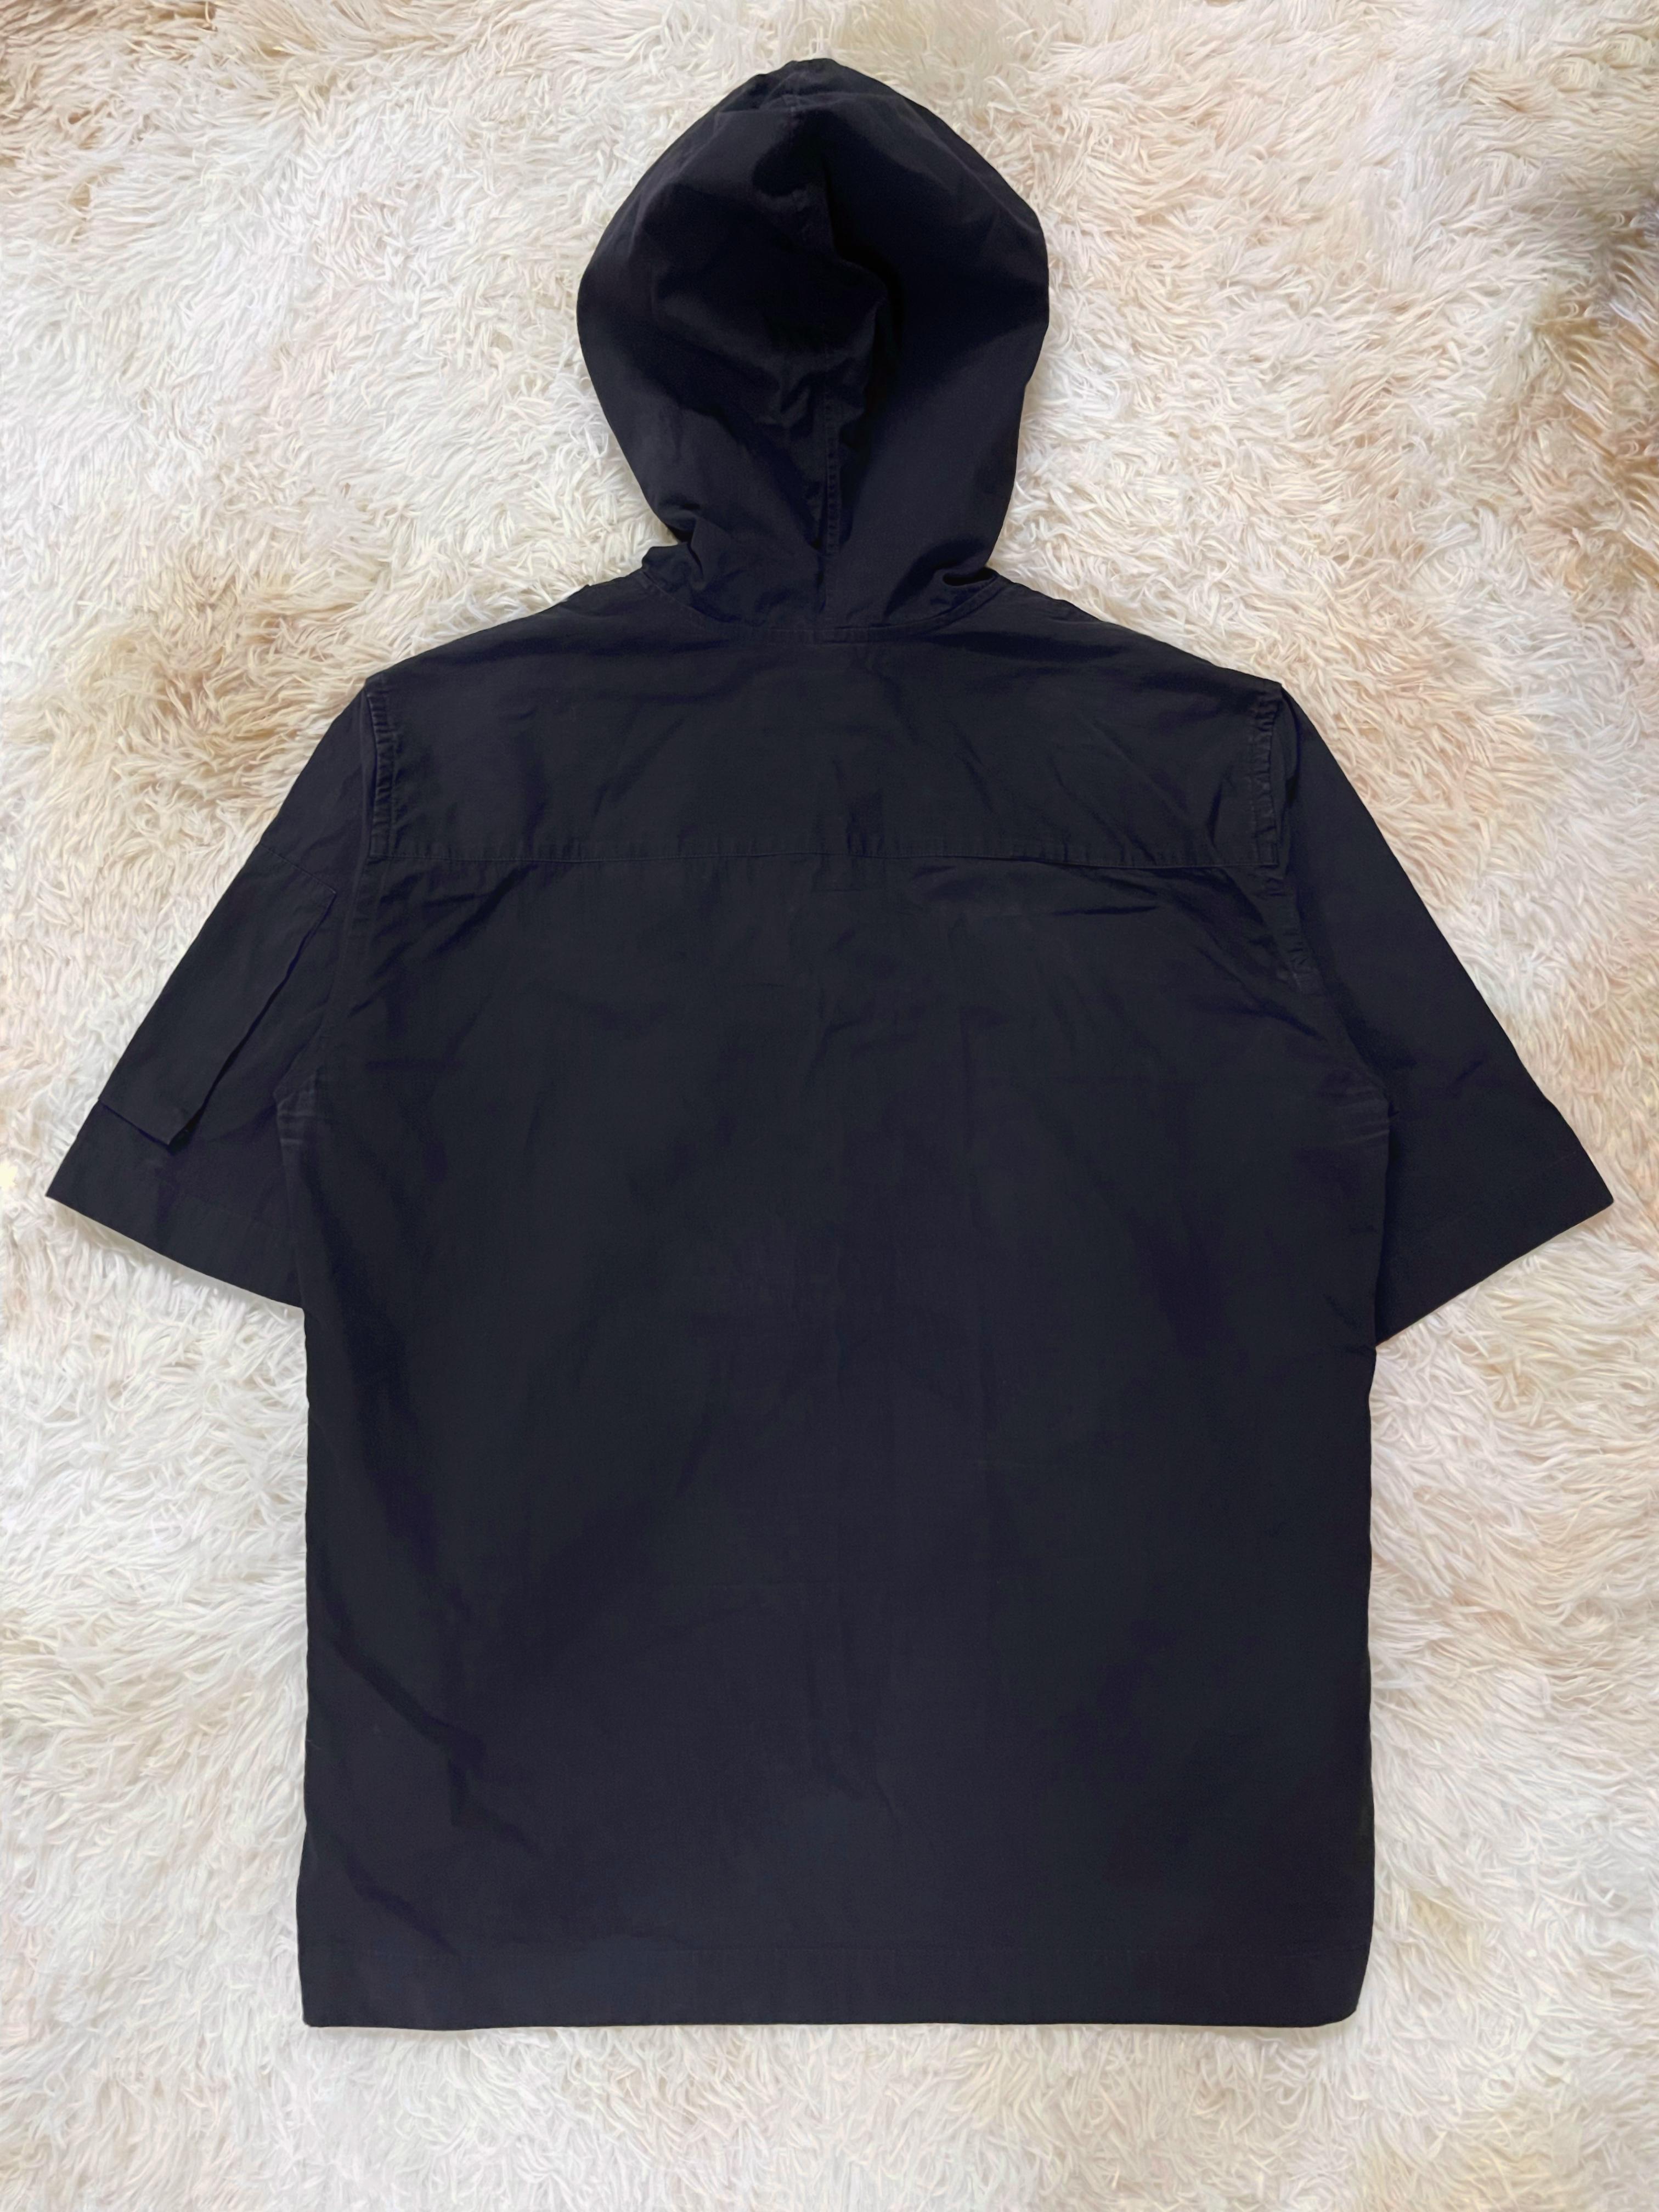 Black Marni S/S2014 Hooded Nylon Shirt